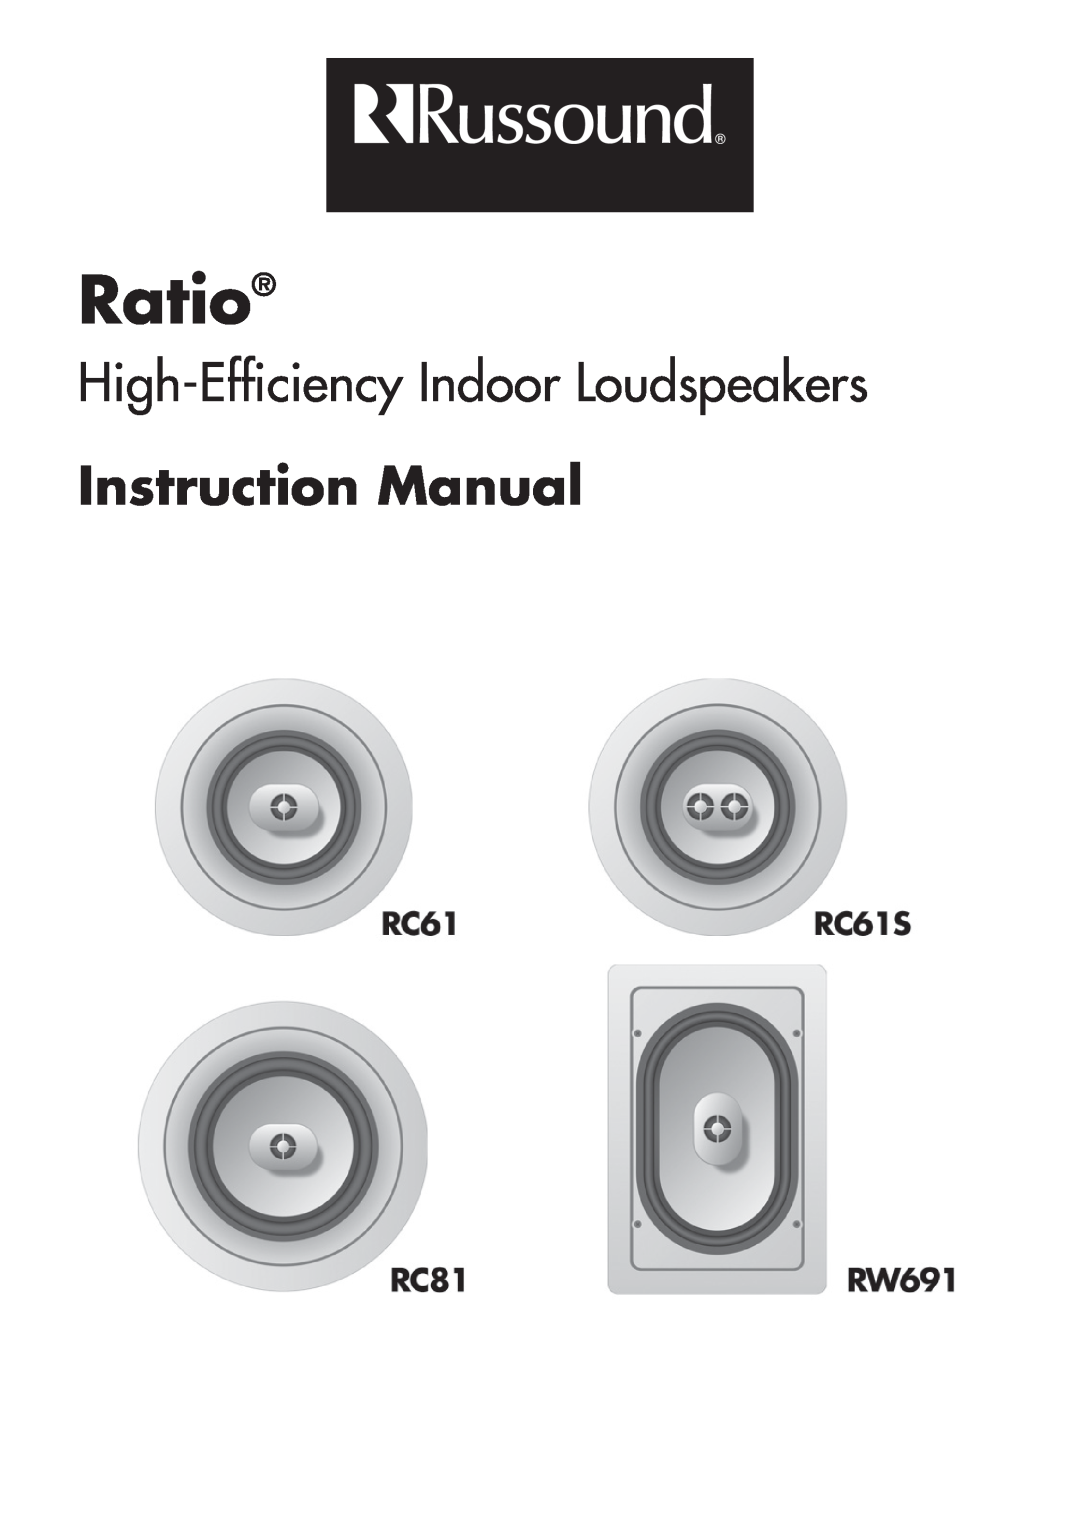 Russound RC61S instruction manual Ratio, High-EfﬁciencyIndoor Loudspeakers 